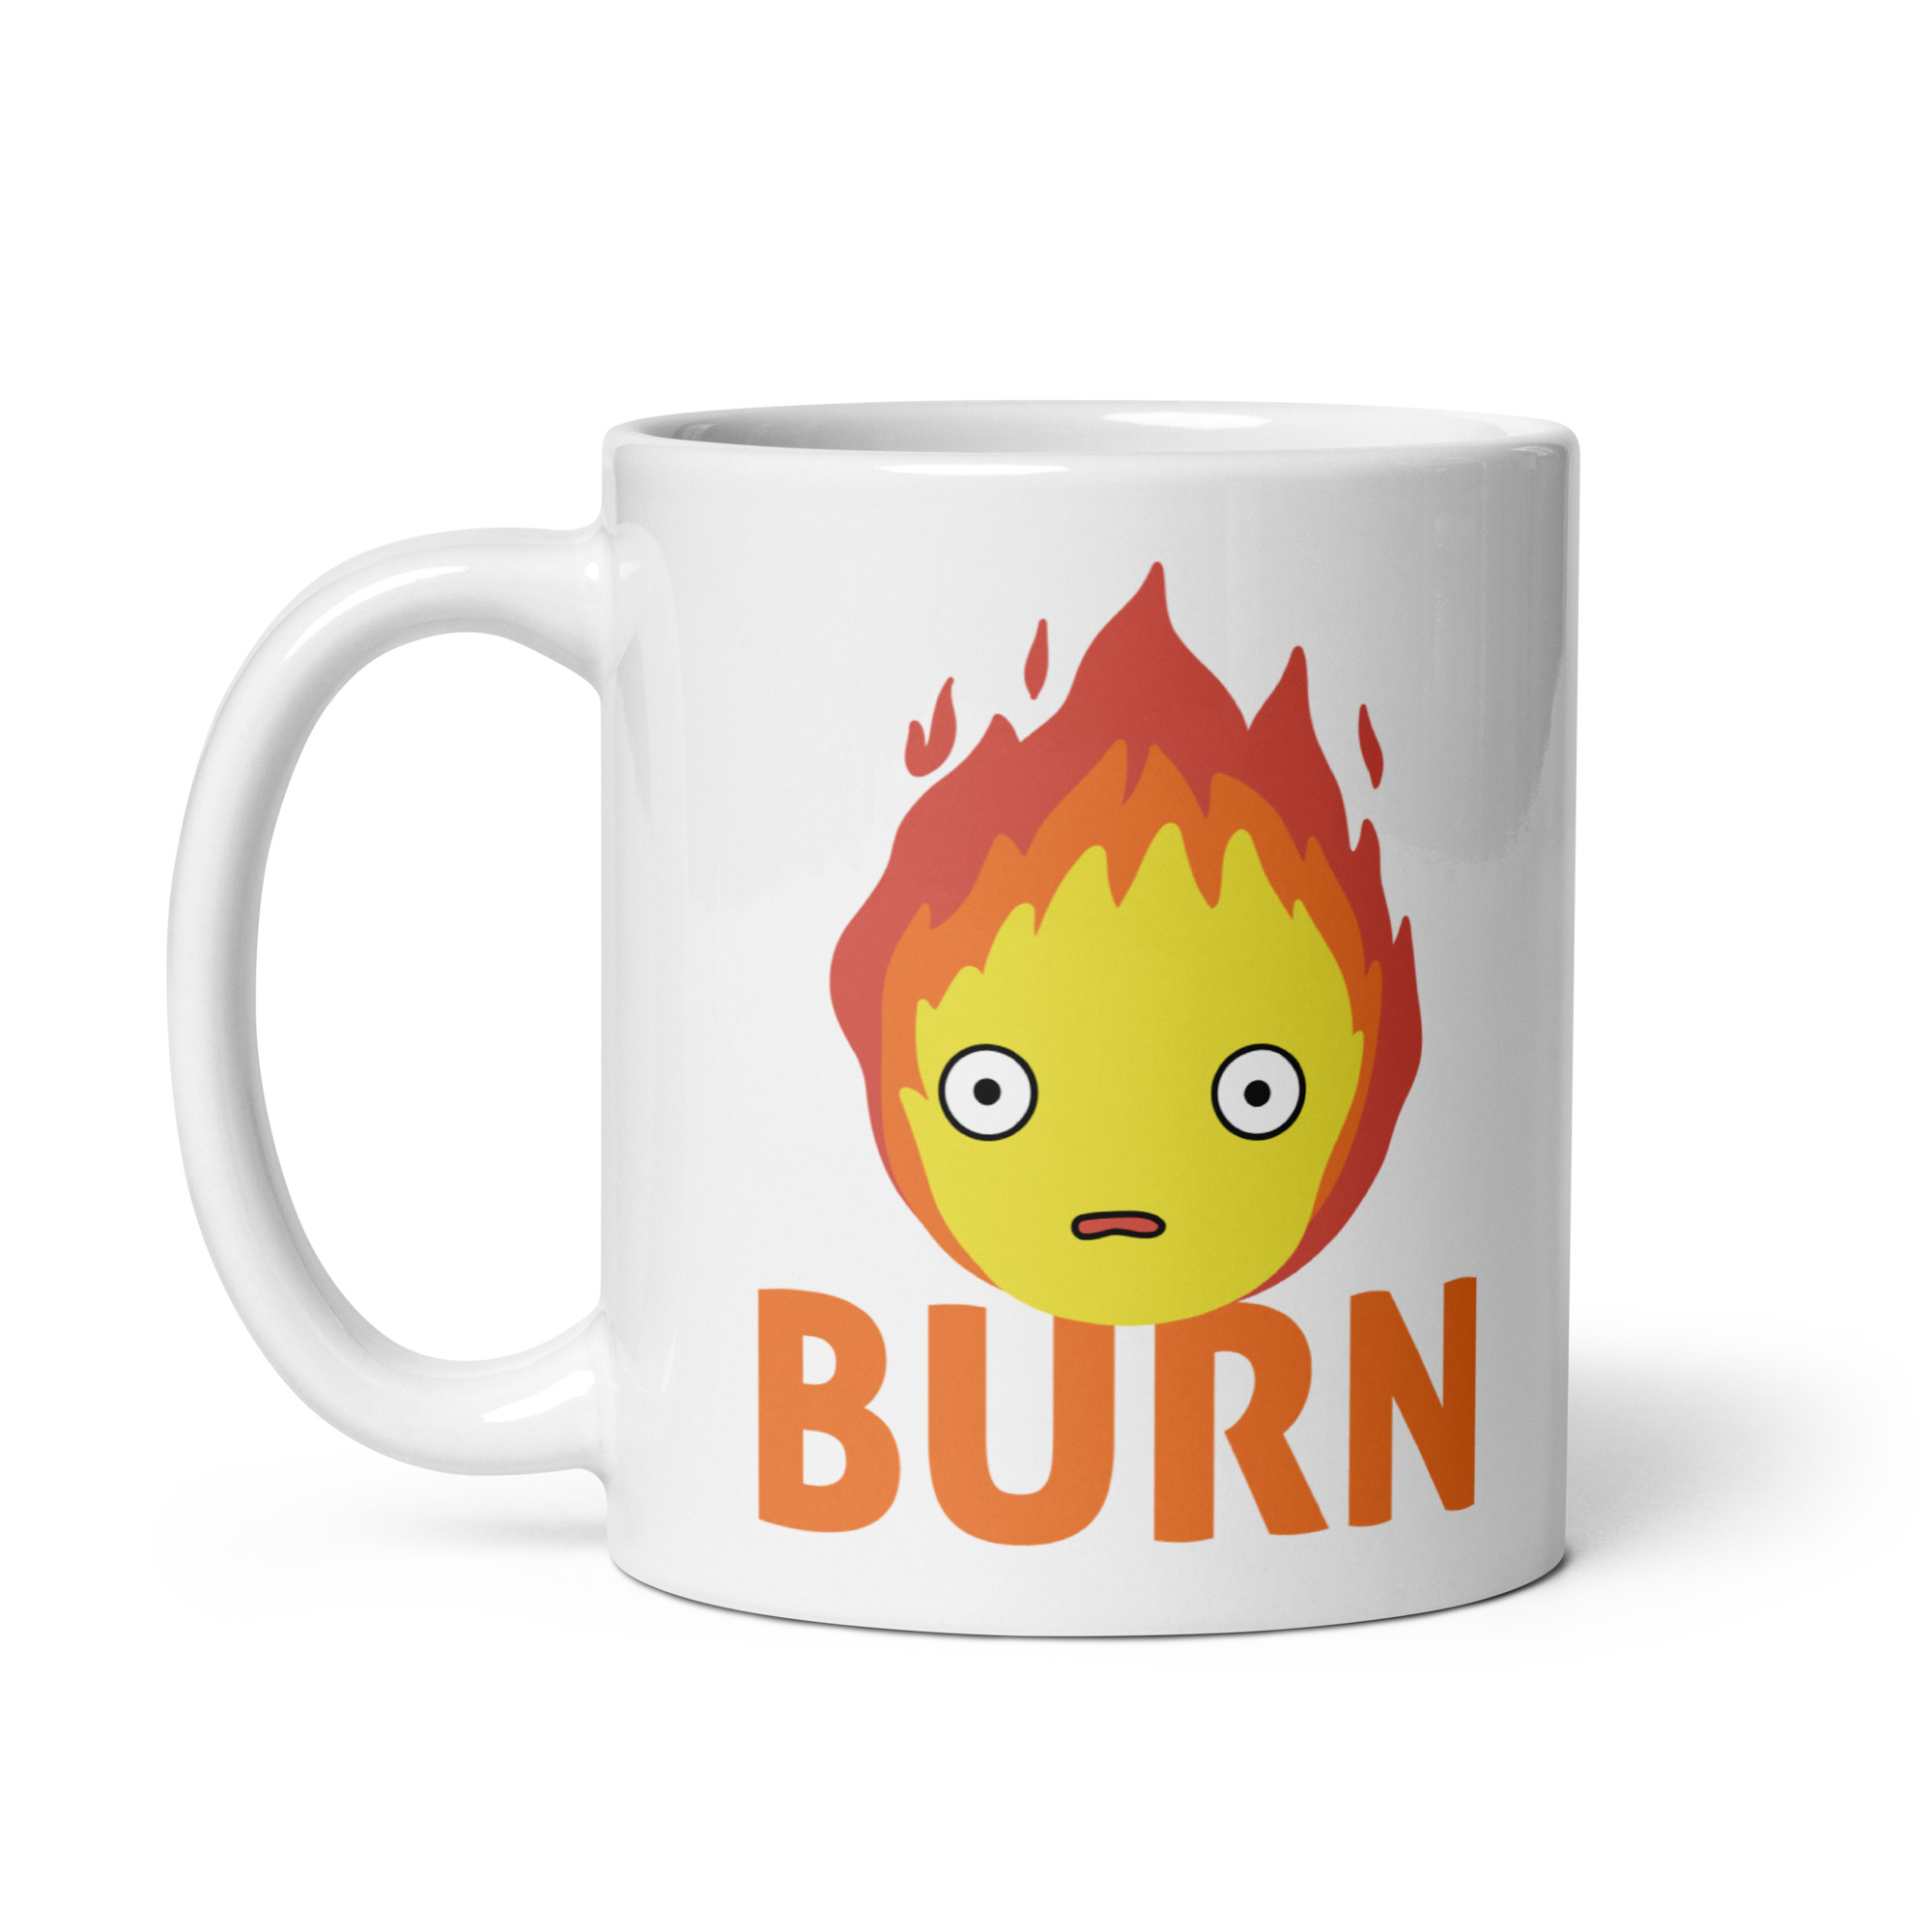 Animated Fire Burn Mug by Wilde Designs